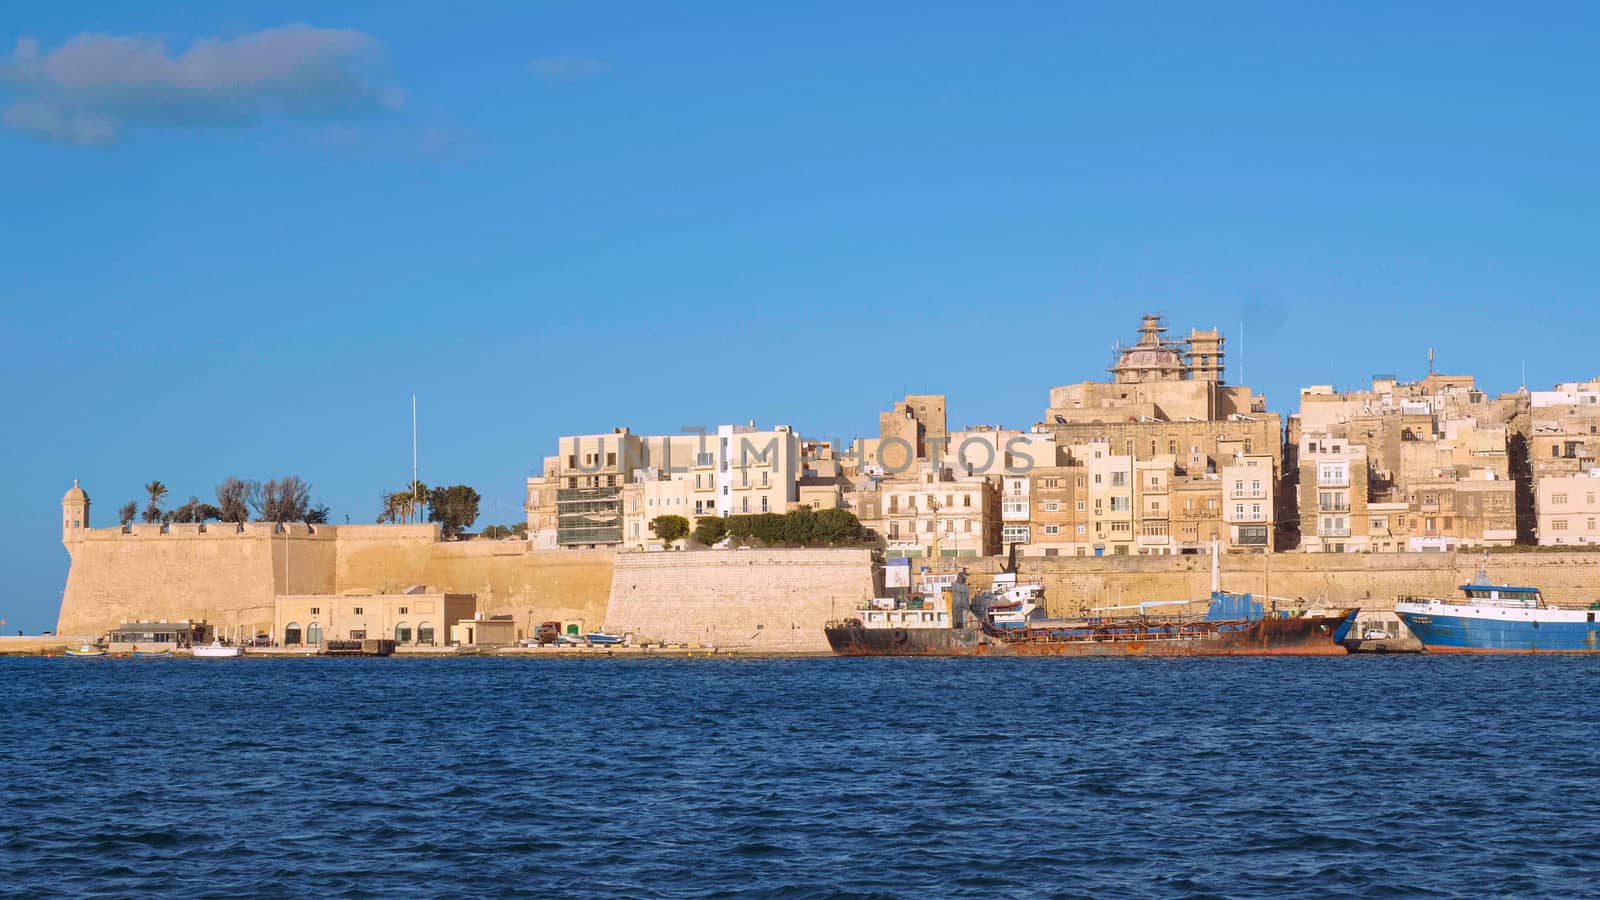 Boat trip along the port of Valletta in Malta by Lattwein